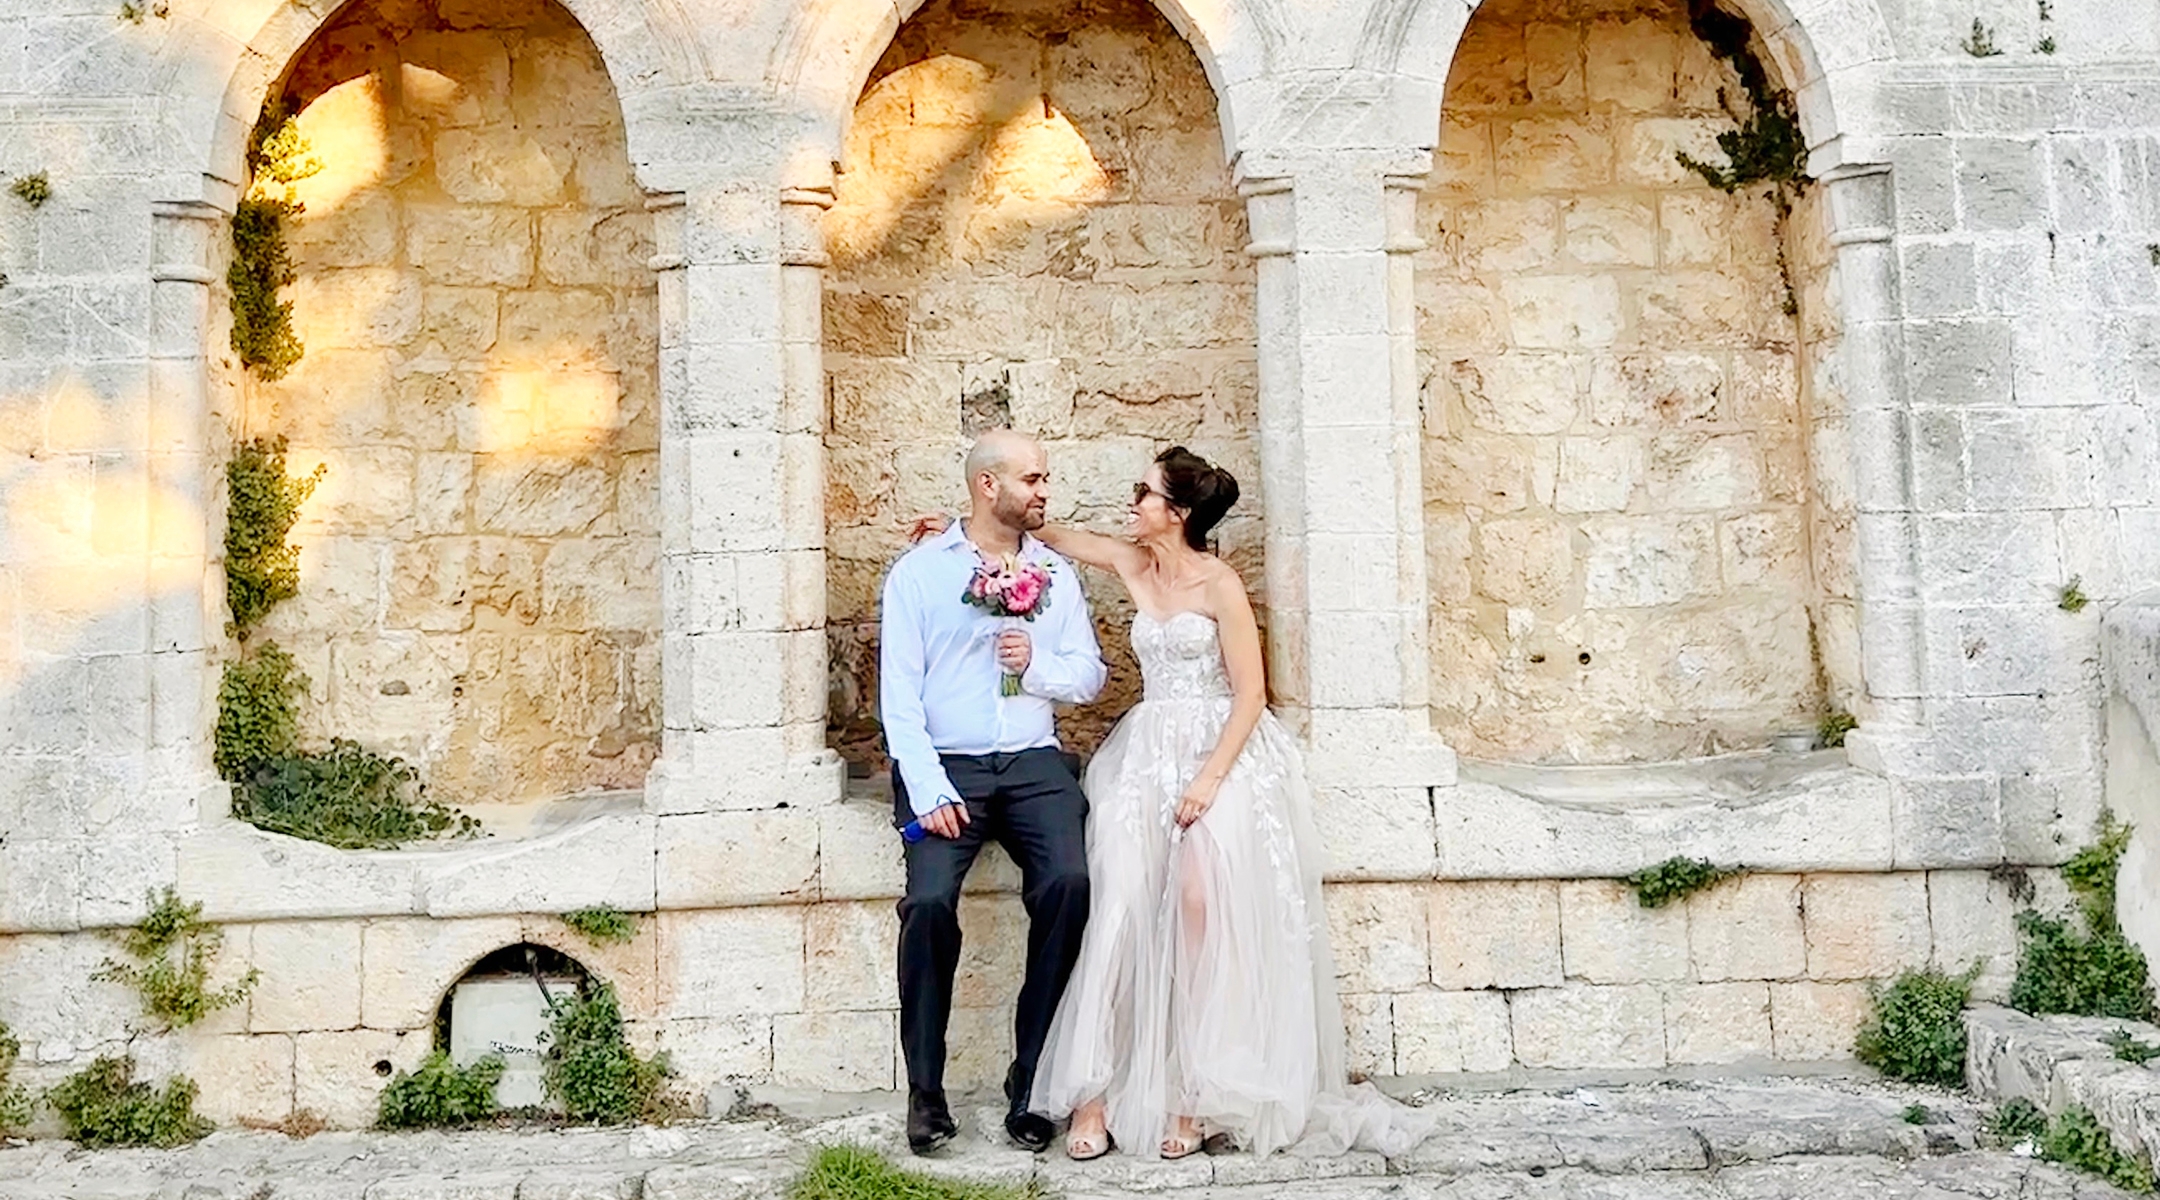 Hallie Applebaum and Evan Raffel held one wedding ceremony in Israel, where Raffel’s mother is from. (Taylor Applebaum)